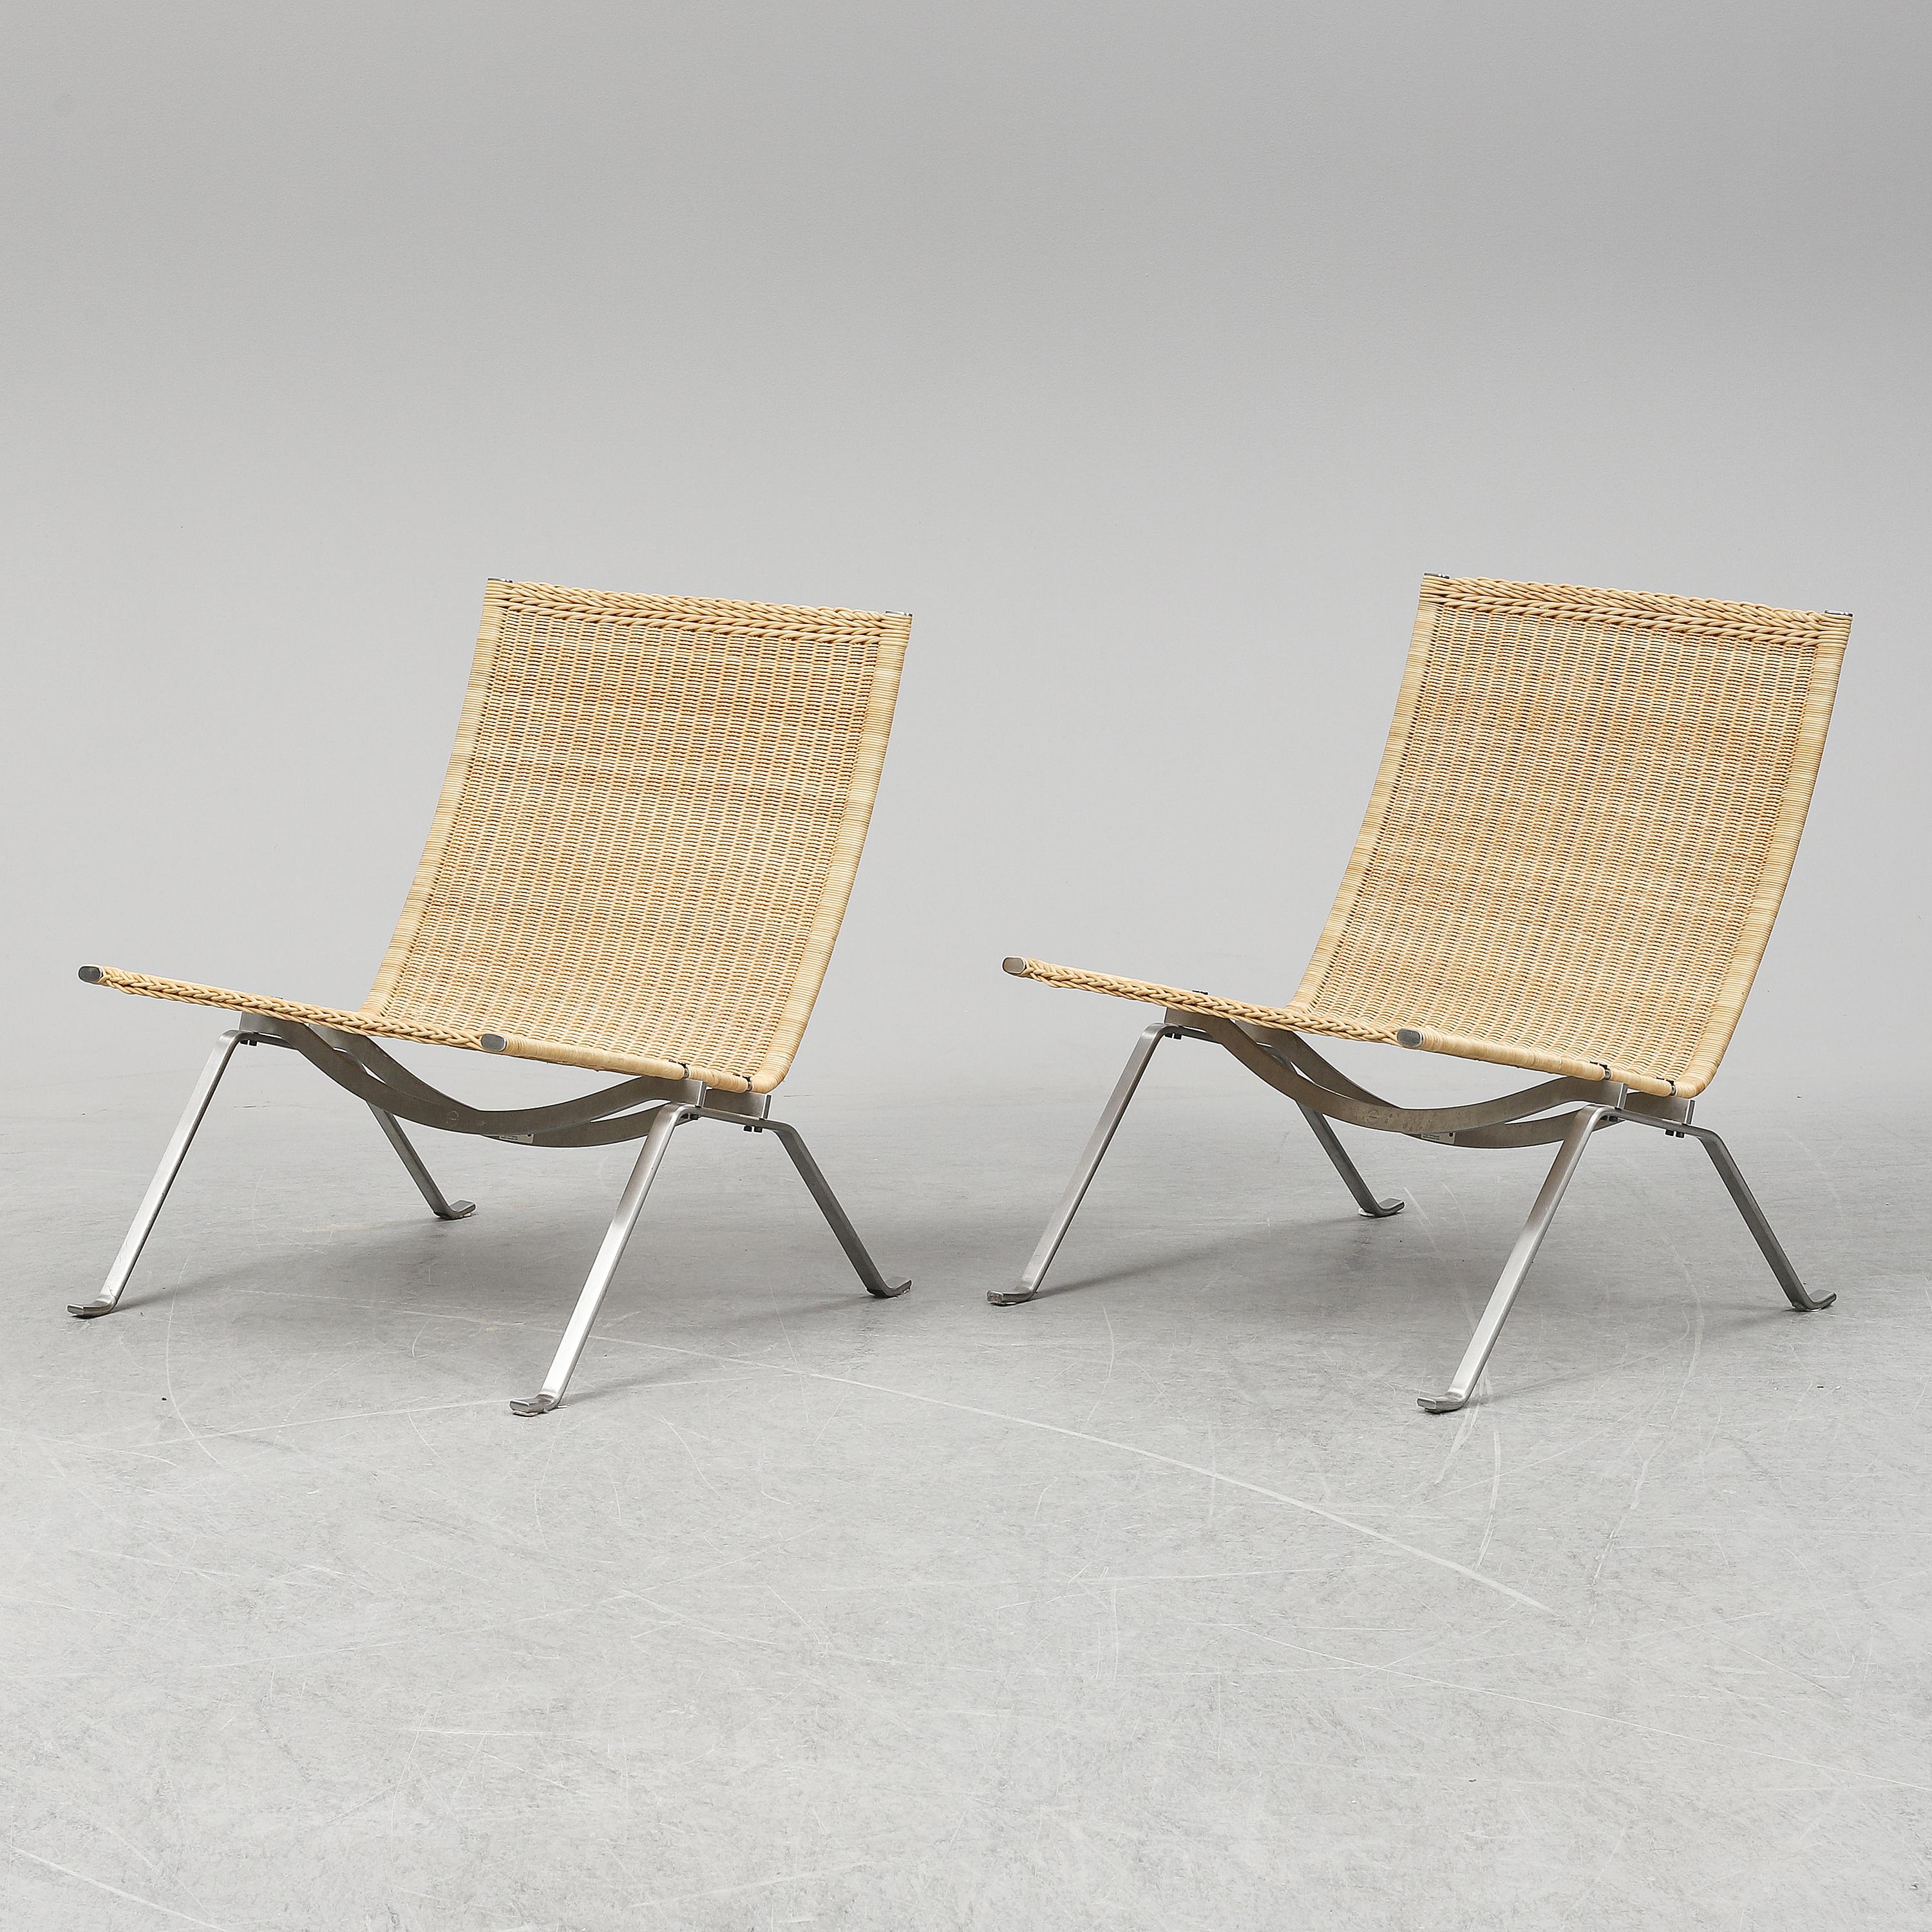 Pair of cane easy chairs model PK-22 designed by Poul Kjaerholm for E. Kold Christensen and produced by Fritz Hansen in Denmark.